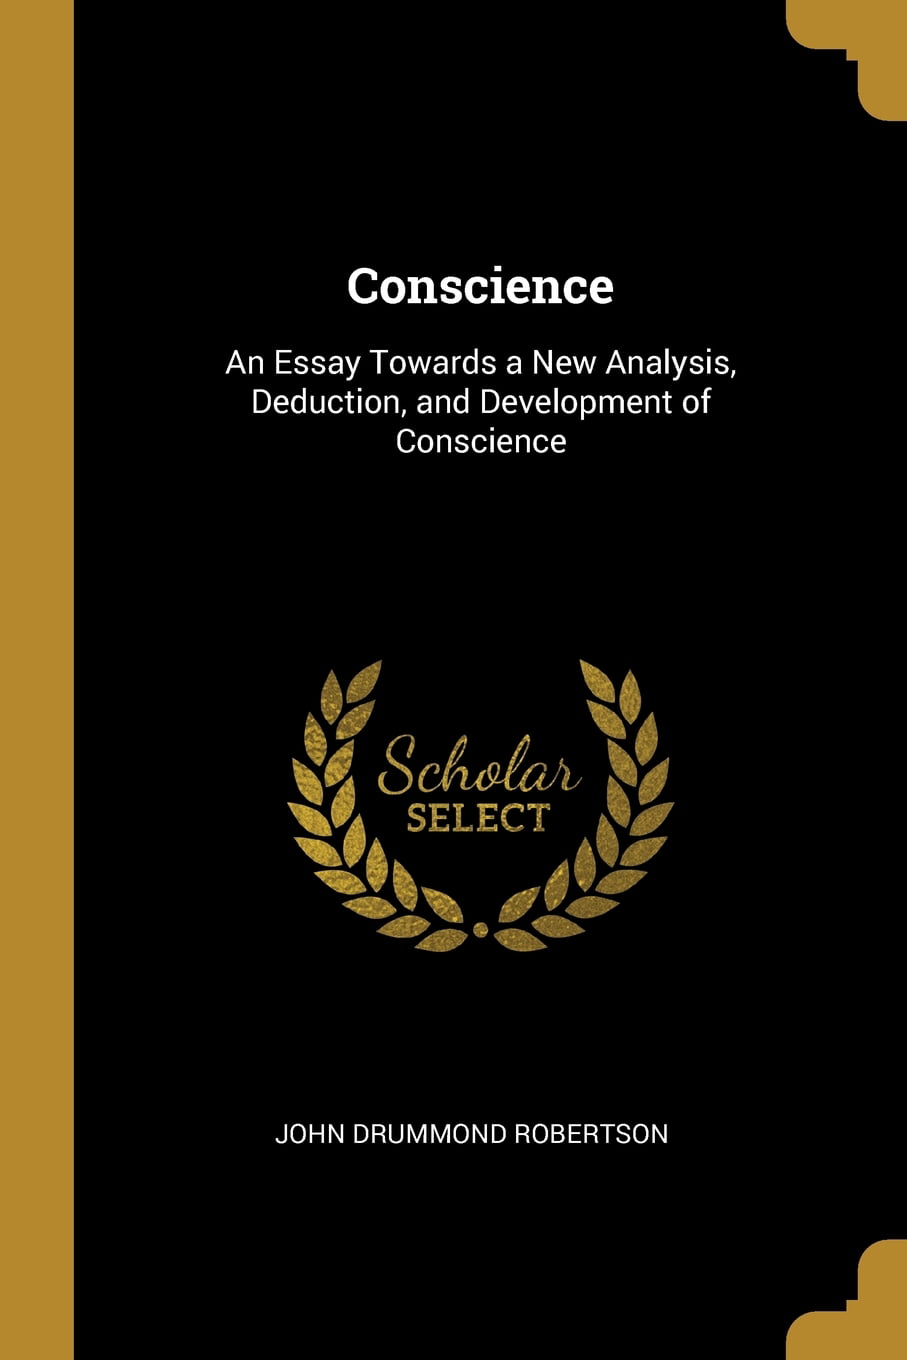 Conscience essay